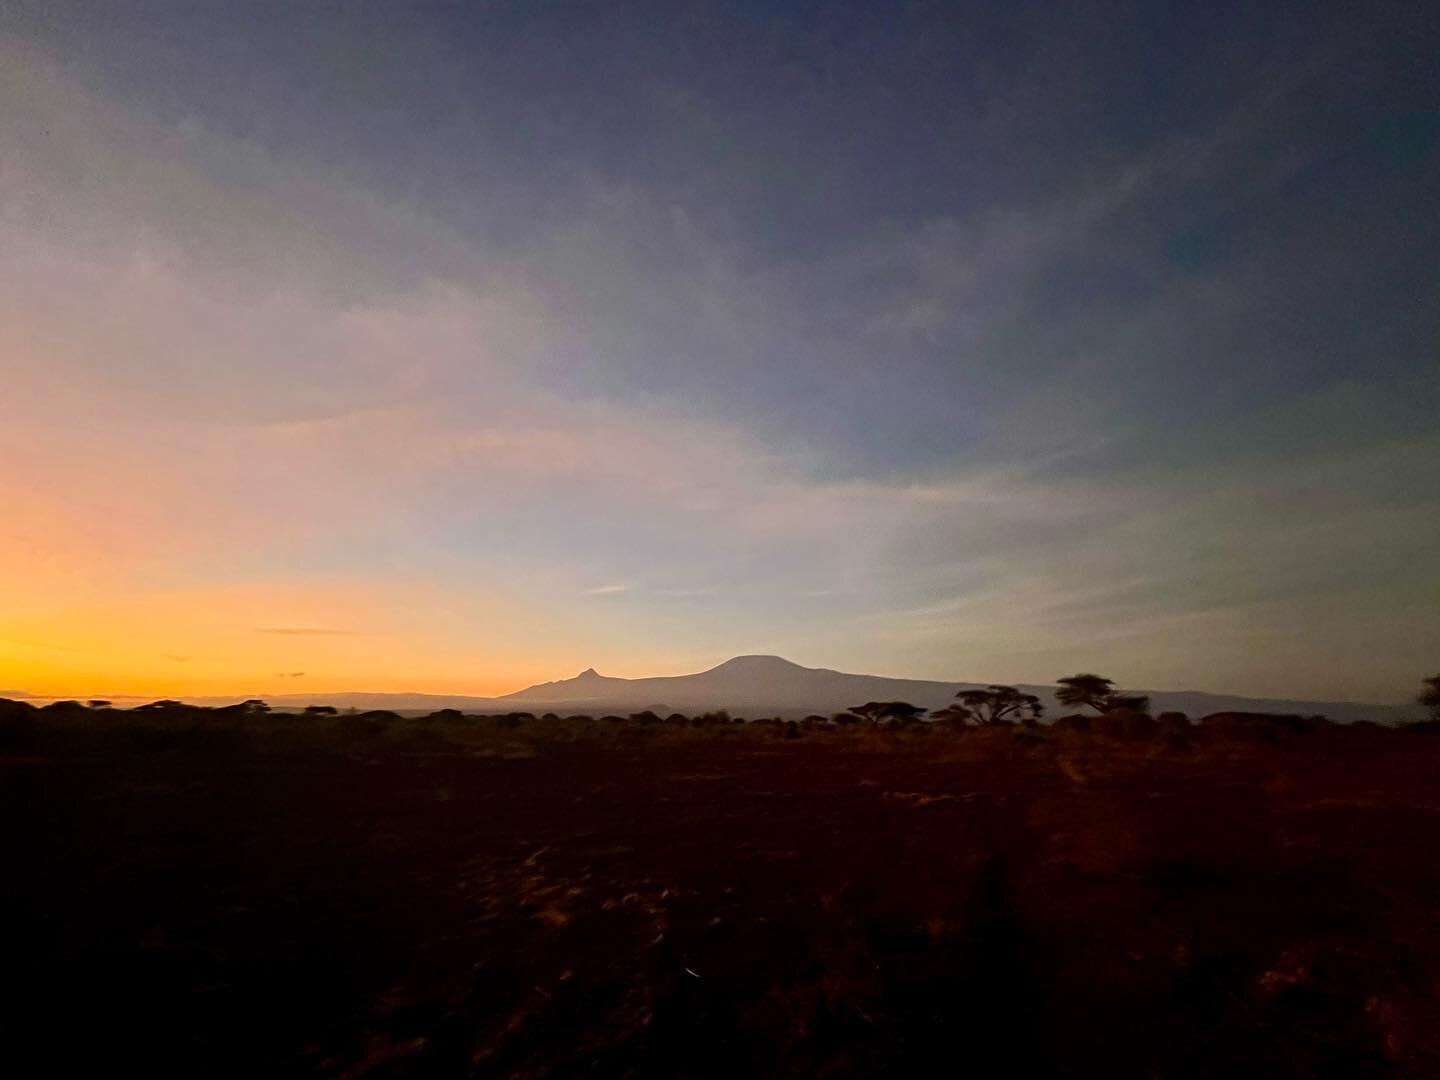 Good morning agin from Kilimanjaro #africa #kilimanjaro #sunrise #africanadventure